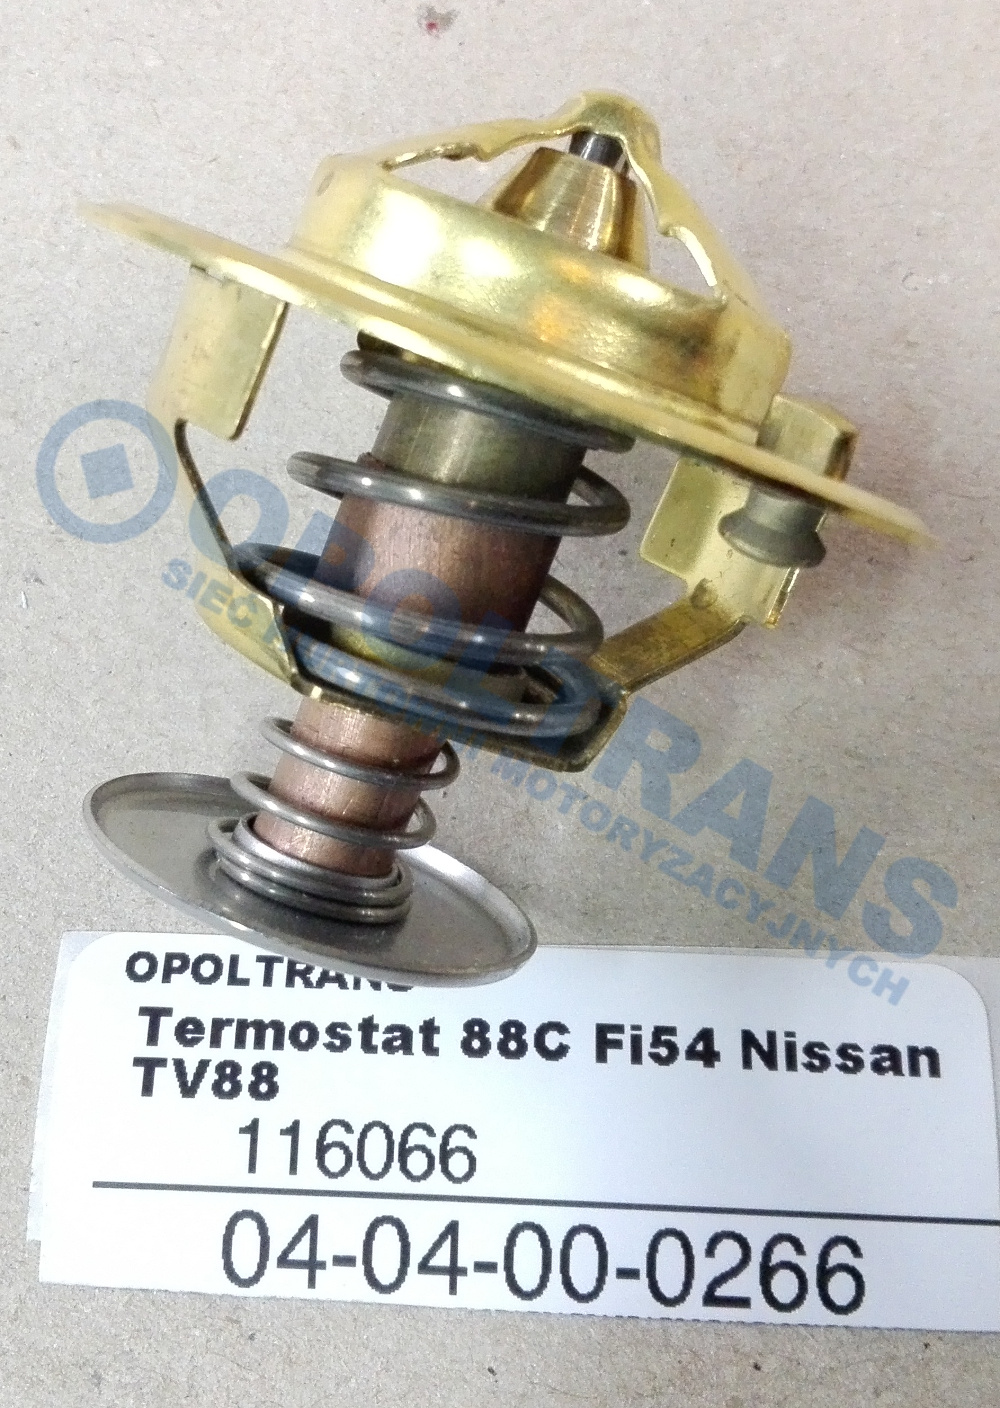  Termostat  88C  Fi54  Nissan  TV88 